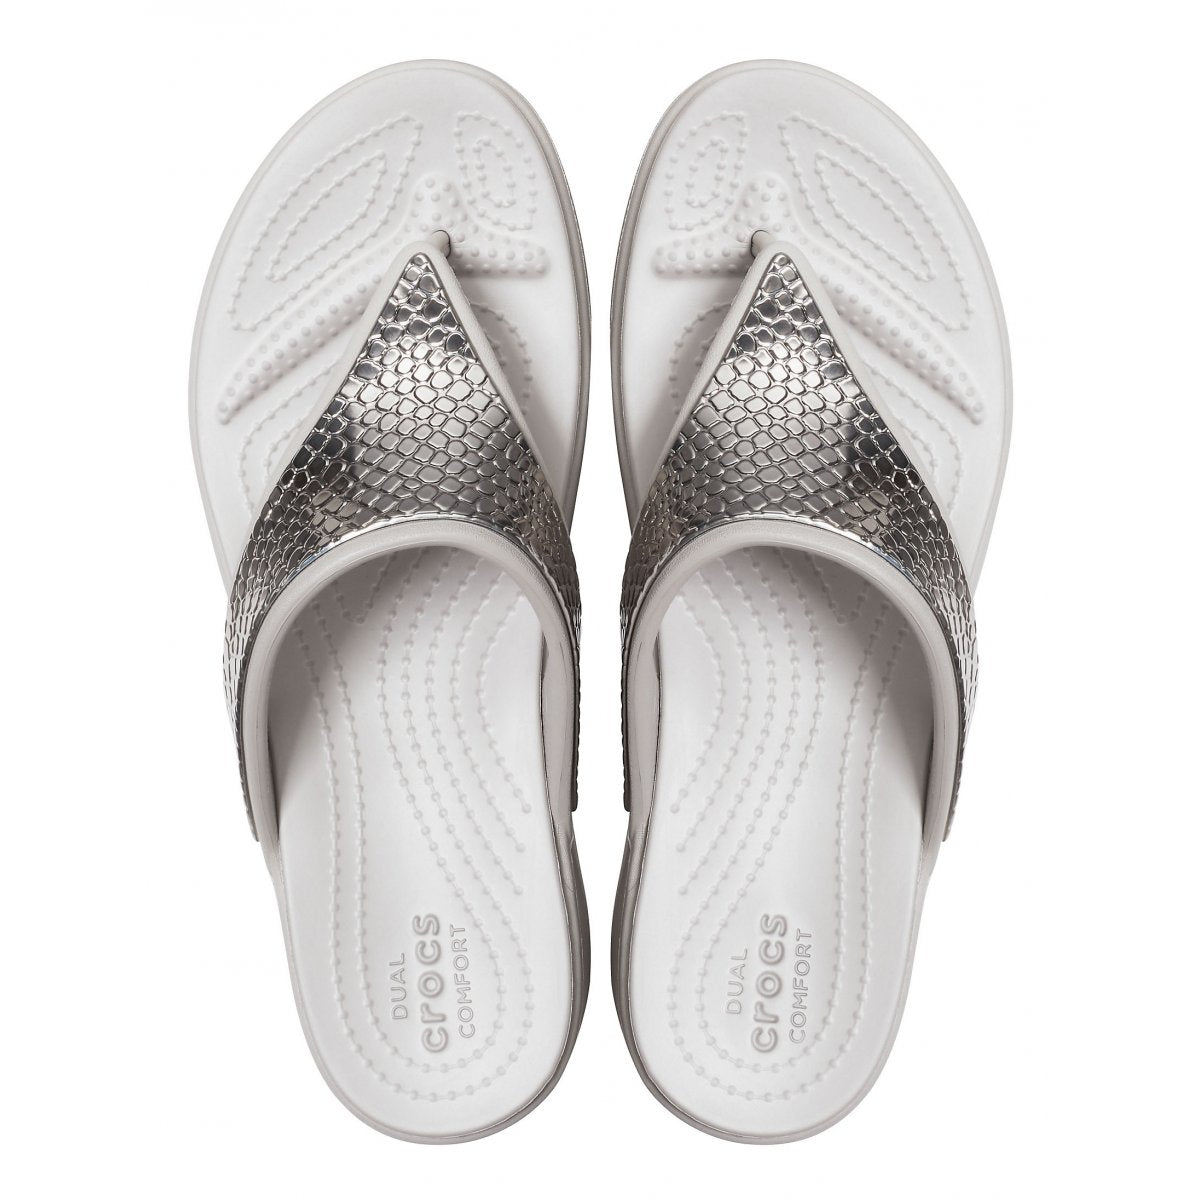 Crocs sandalo infradito da donna  Monterey Wedge Flip W 206303-0GO argento platino